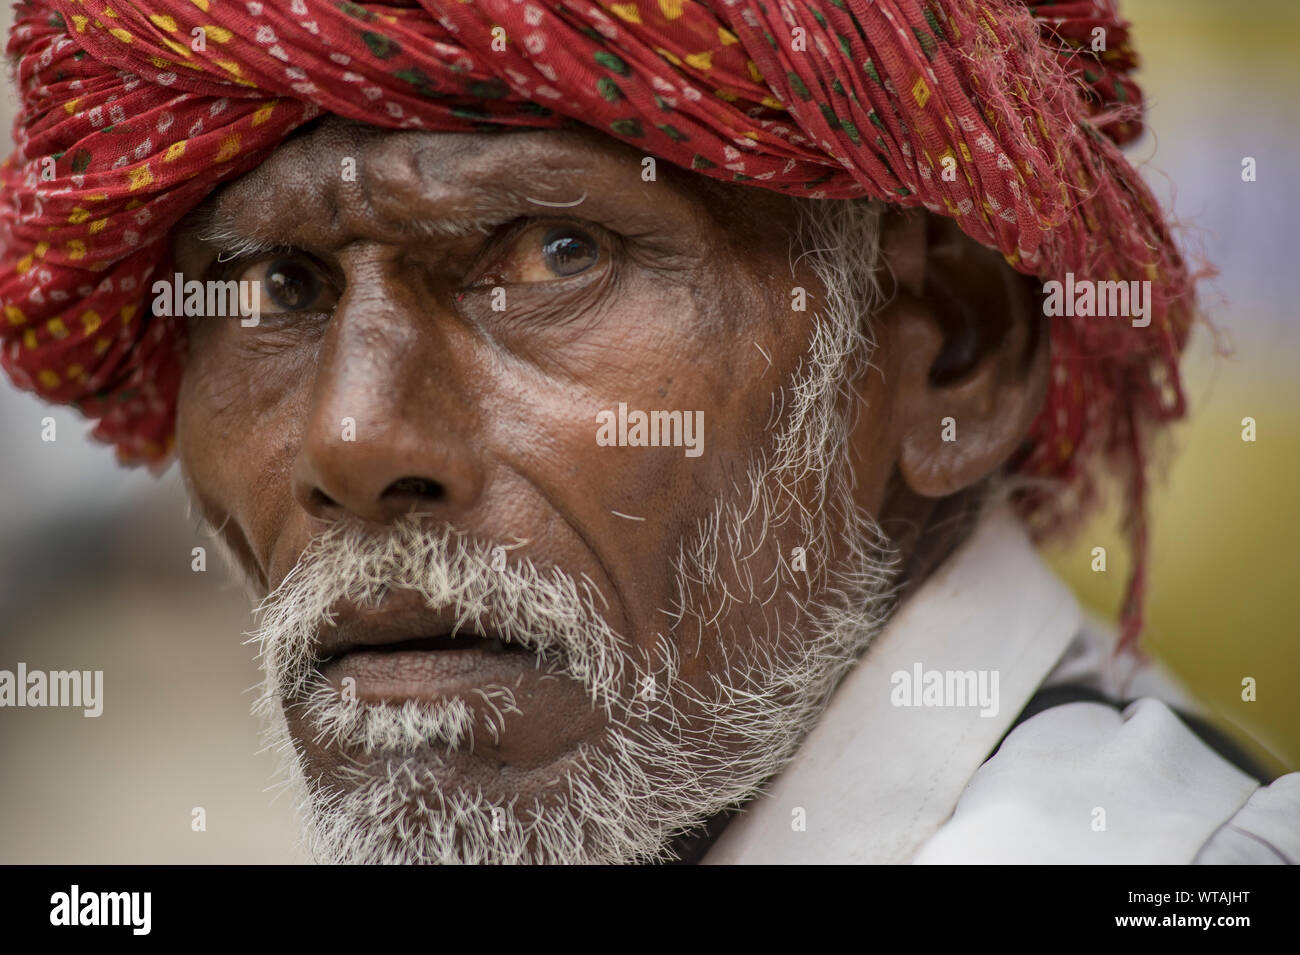 Rajasthani man looking away wearing a red turban Stock Photo